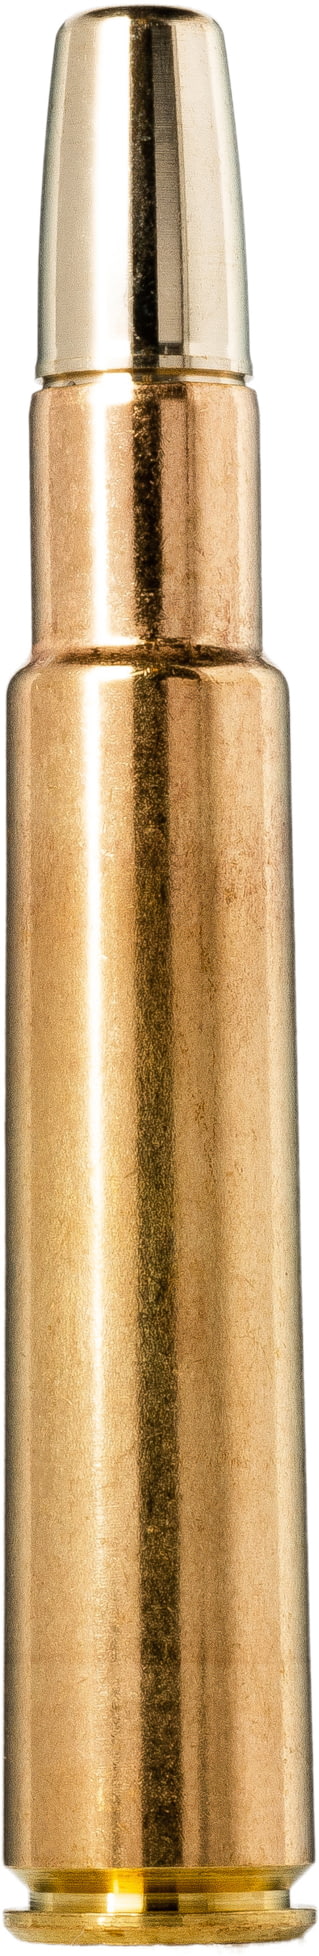 Norma Solid Ammunition .416 Rigby 400 Grain Solid Brass Cased Centerfire Rifle Ammunition